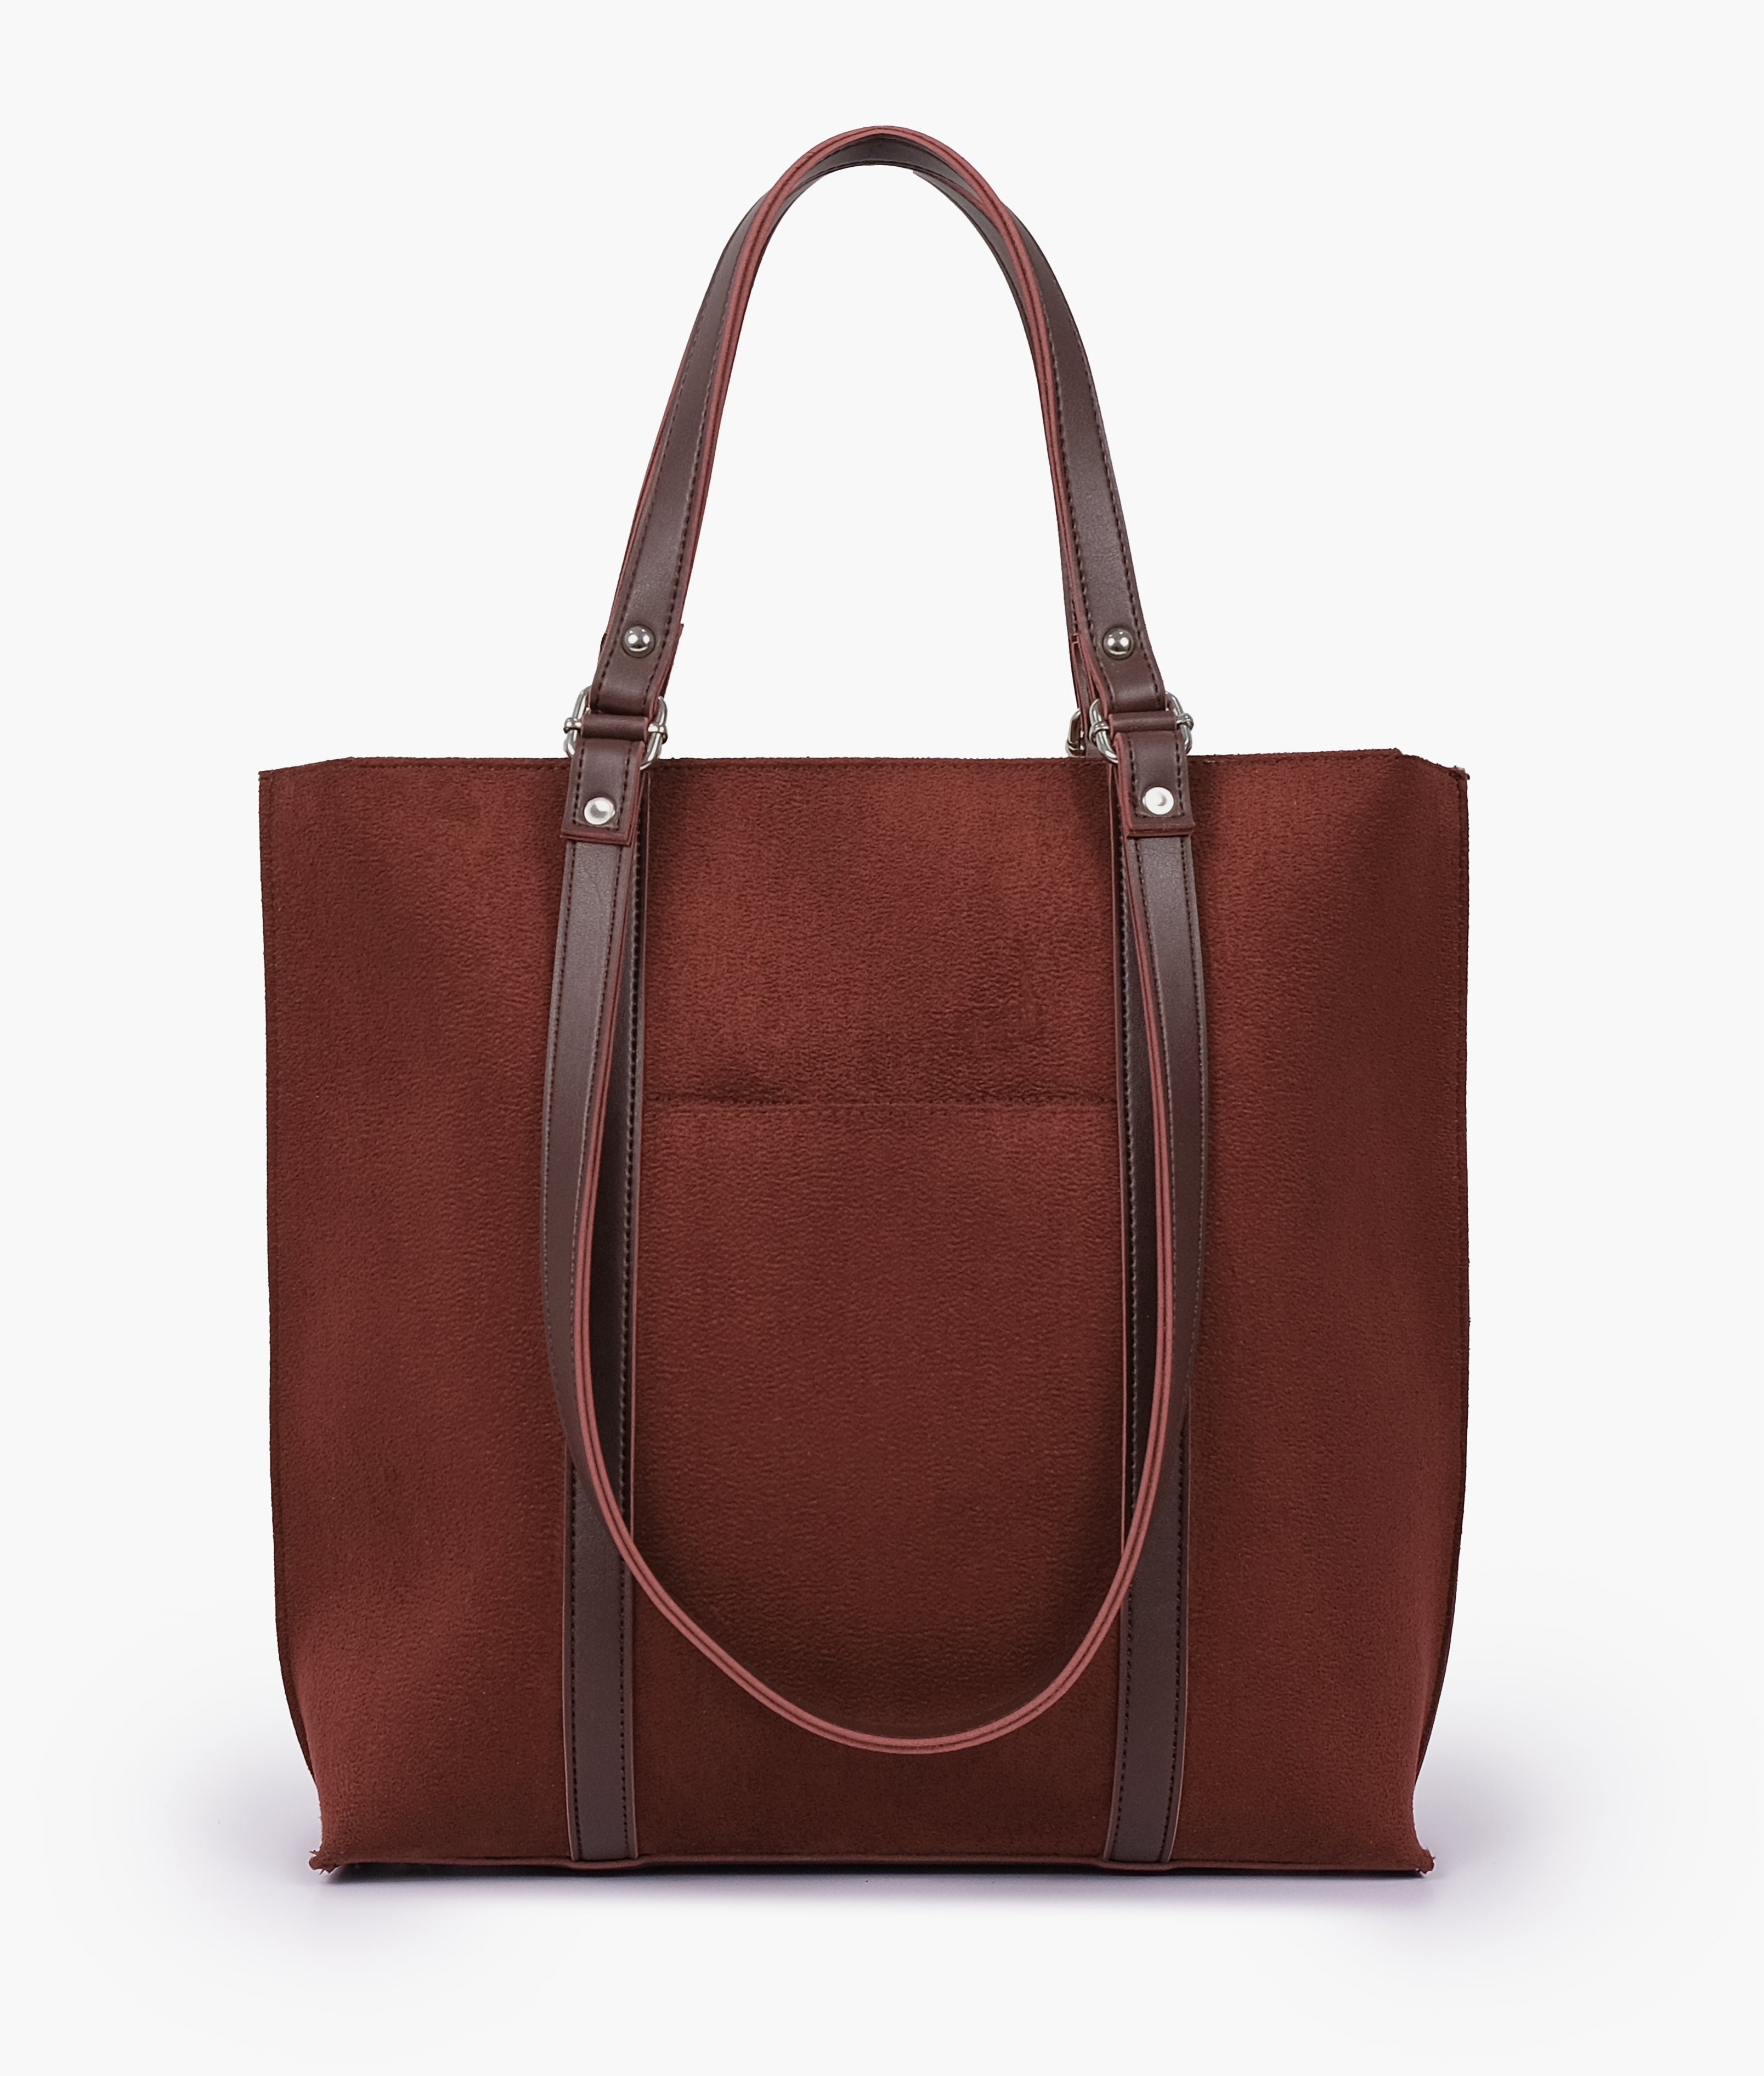 Dark brown suede double-handle tote bag